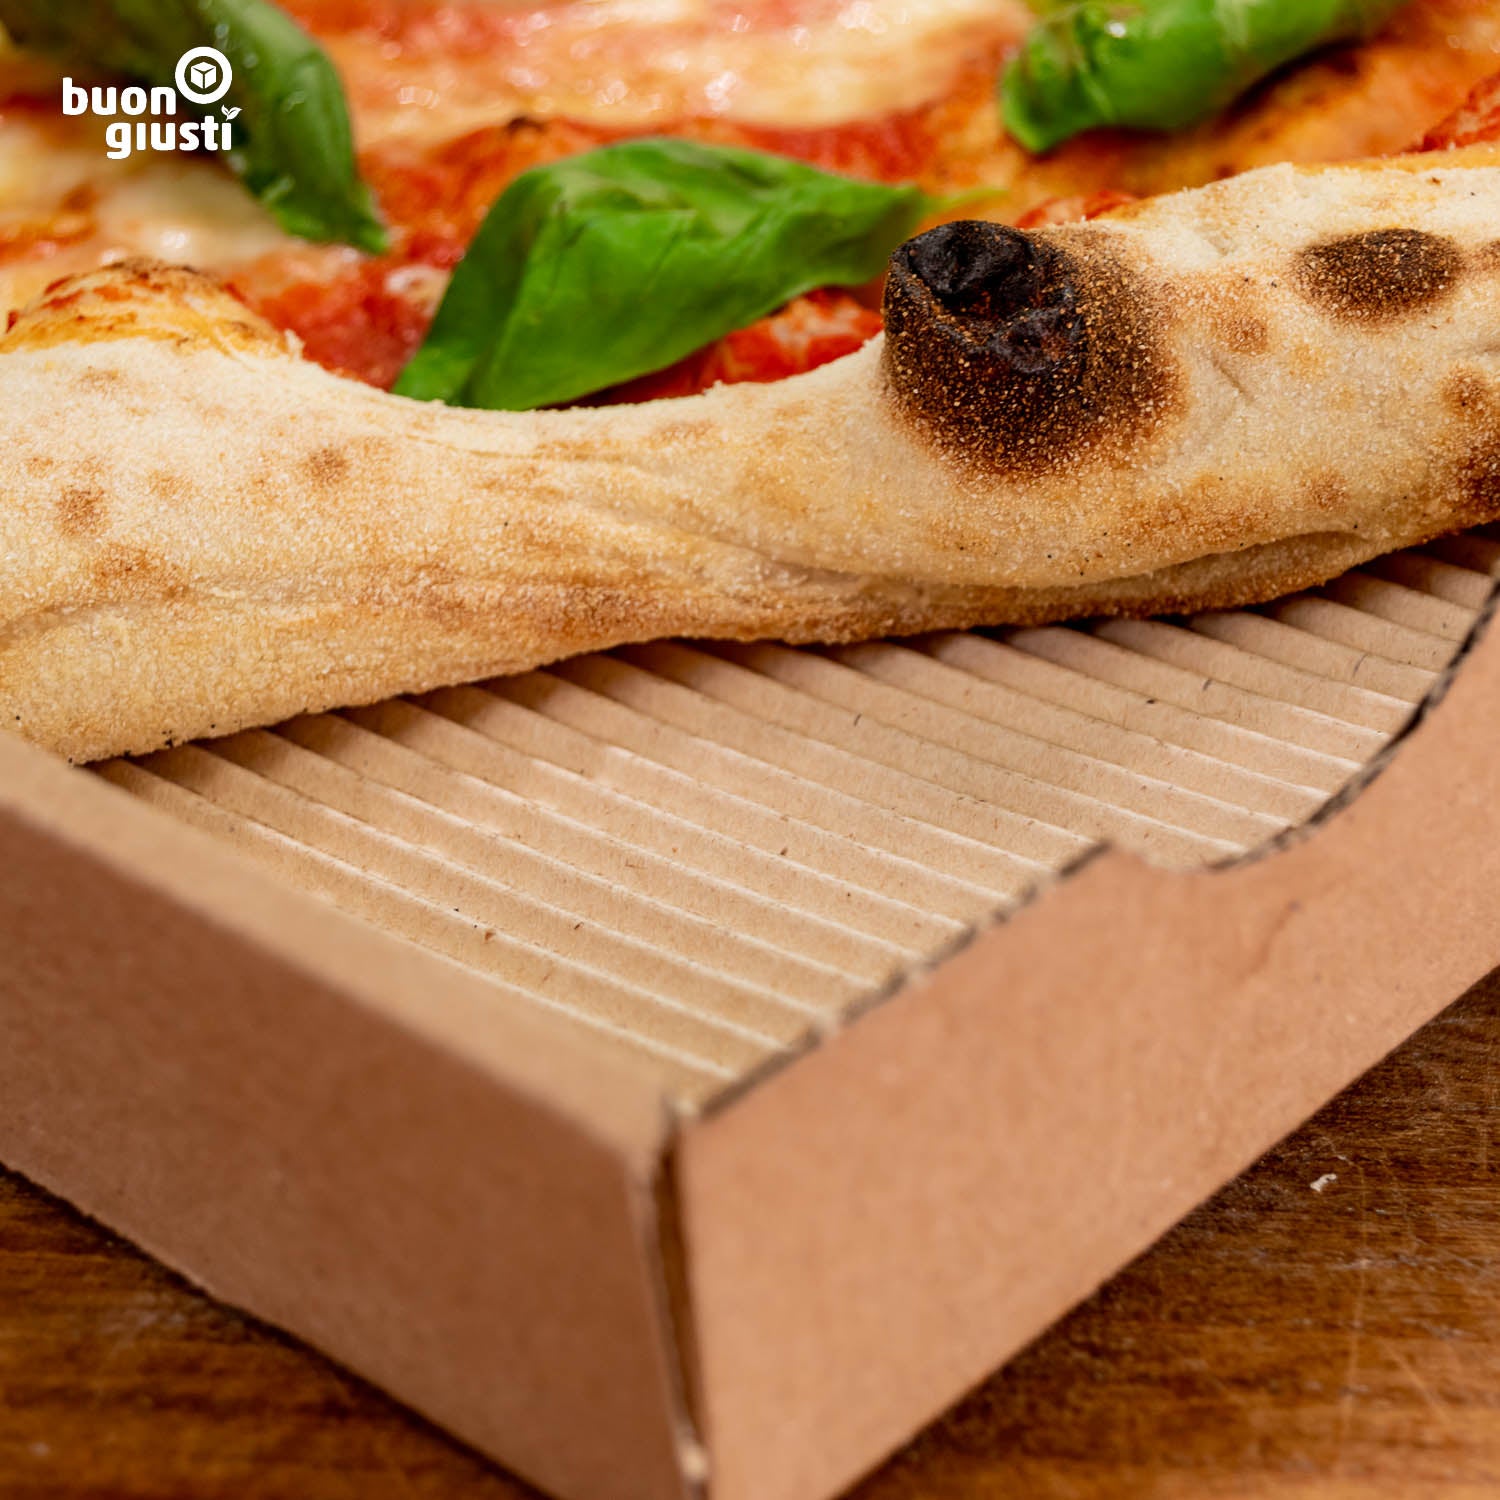 250 Stk. | Pizza Pad 27x27 cm für eine saubere und knackige Pizza - Pizzakarton - buongiusti AG - personalisiert ab 100 Stück